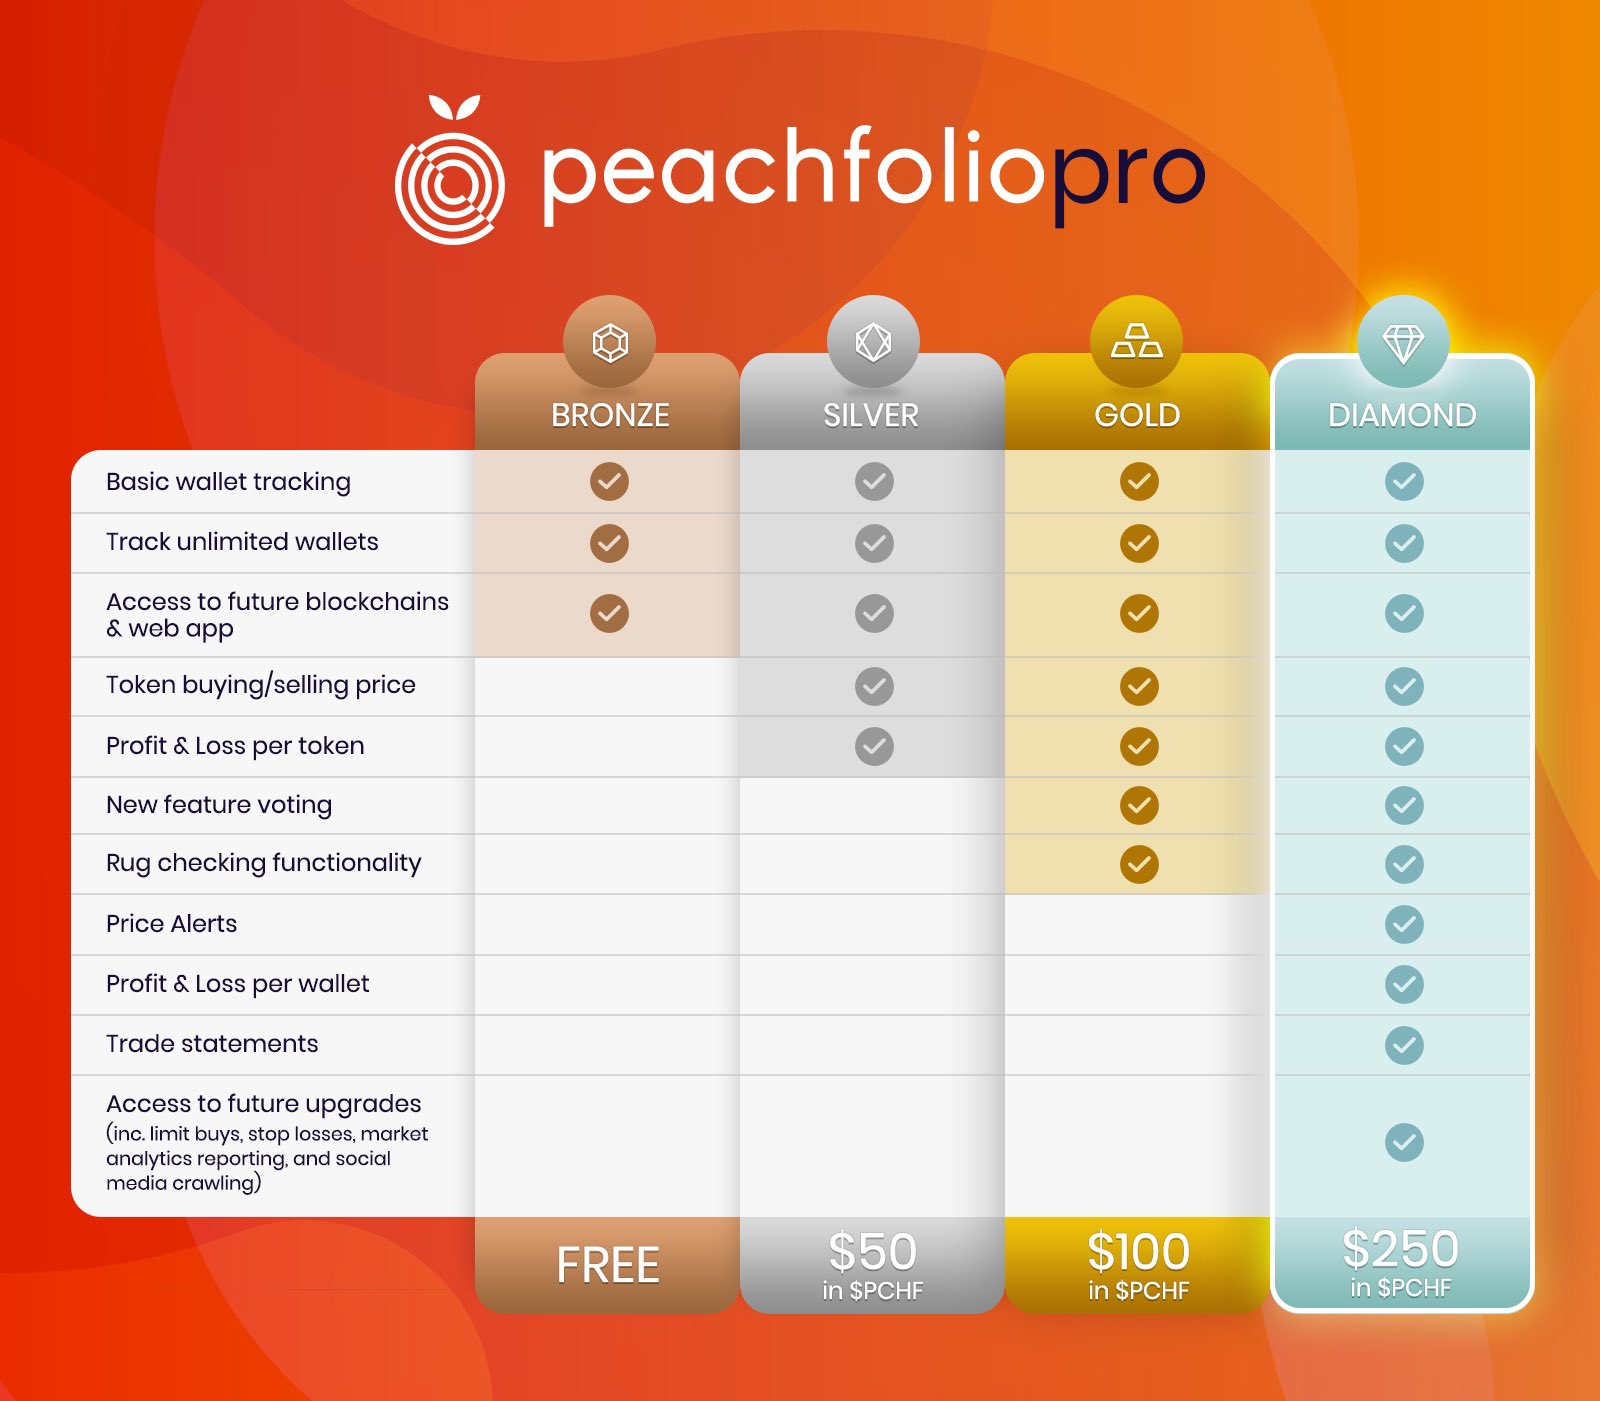 Peachfolio Pro pricing tiers for the Peachfolio app